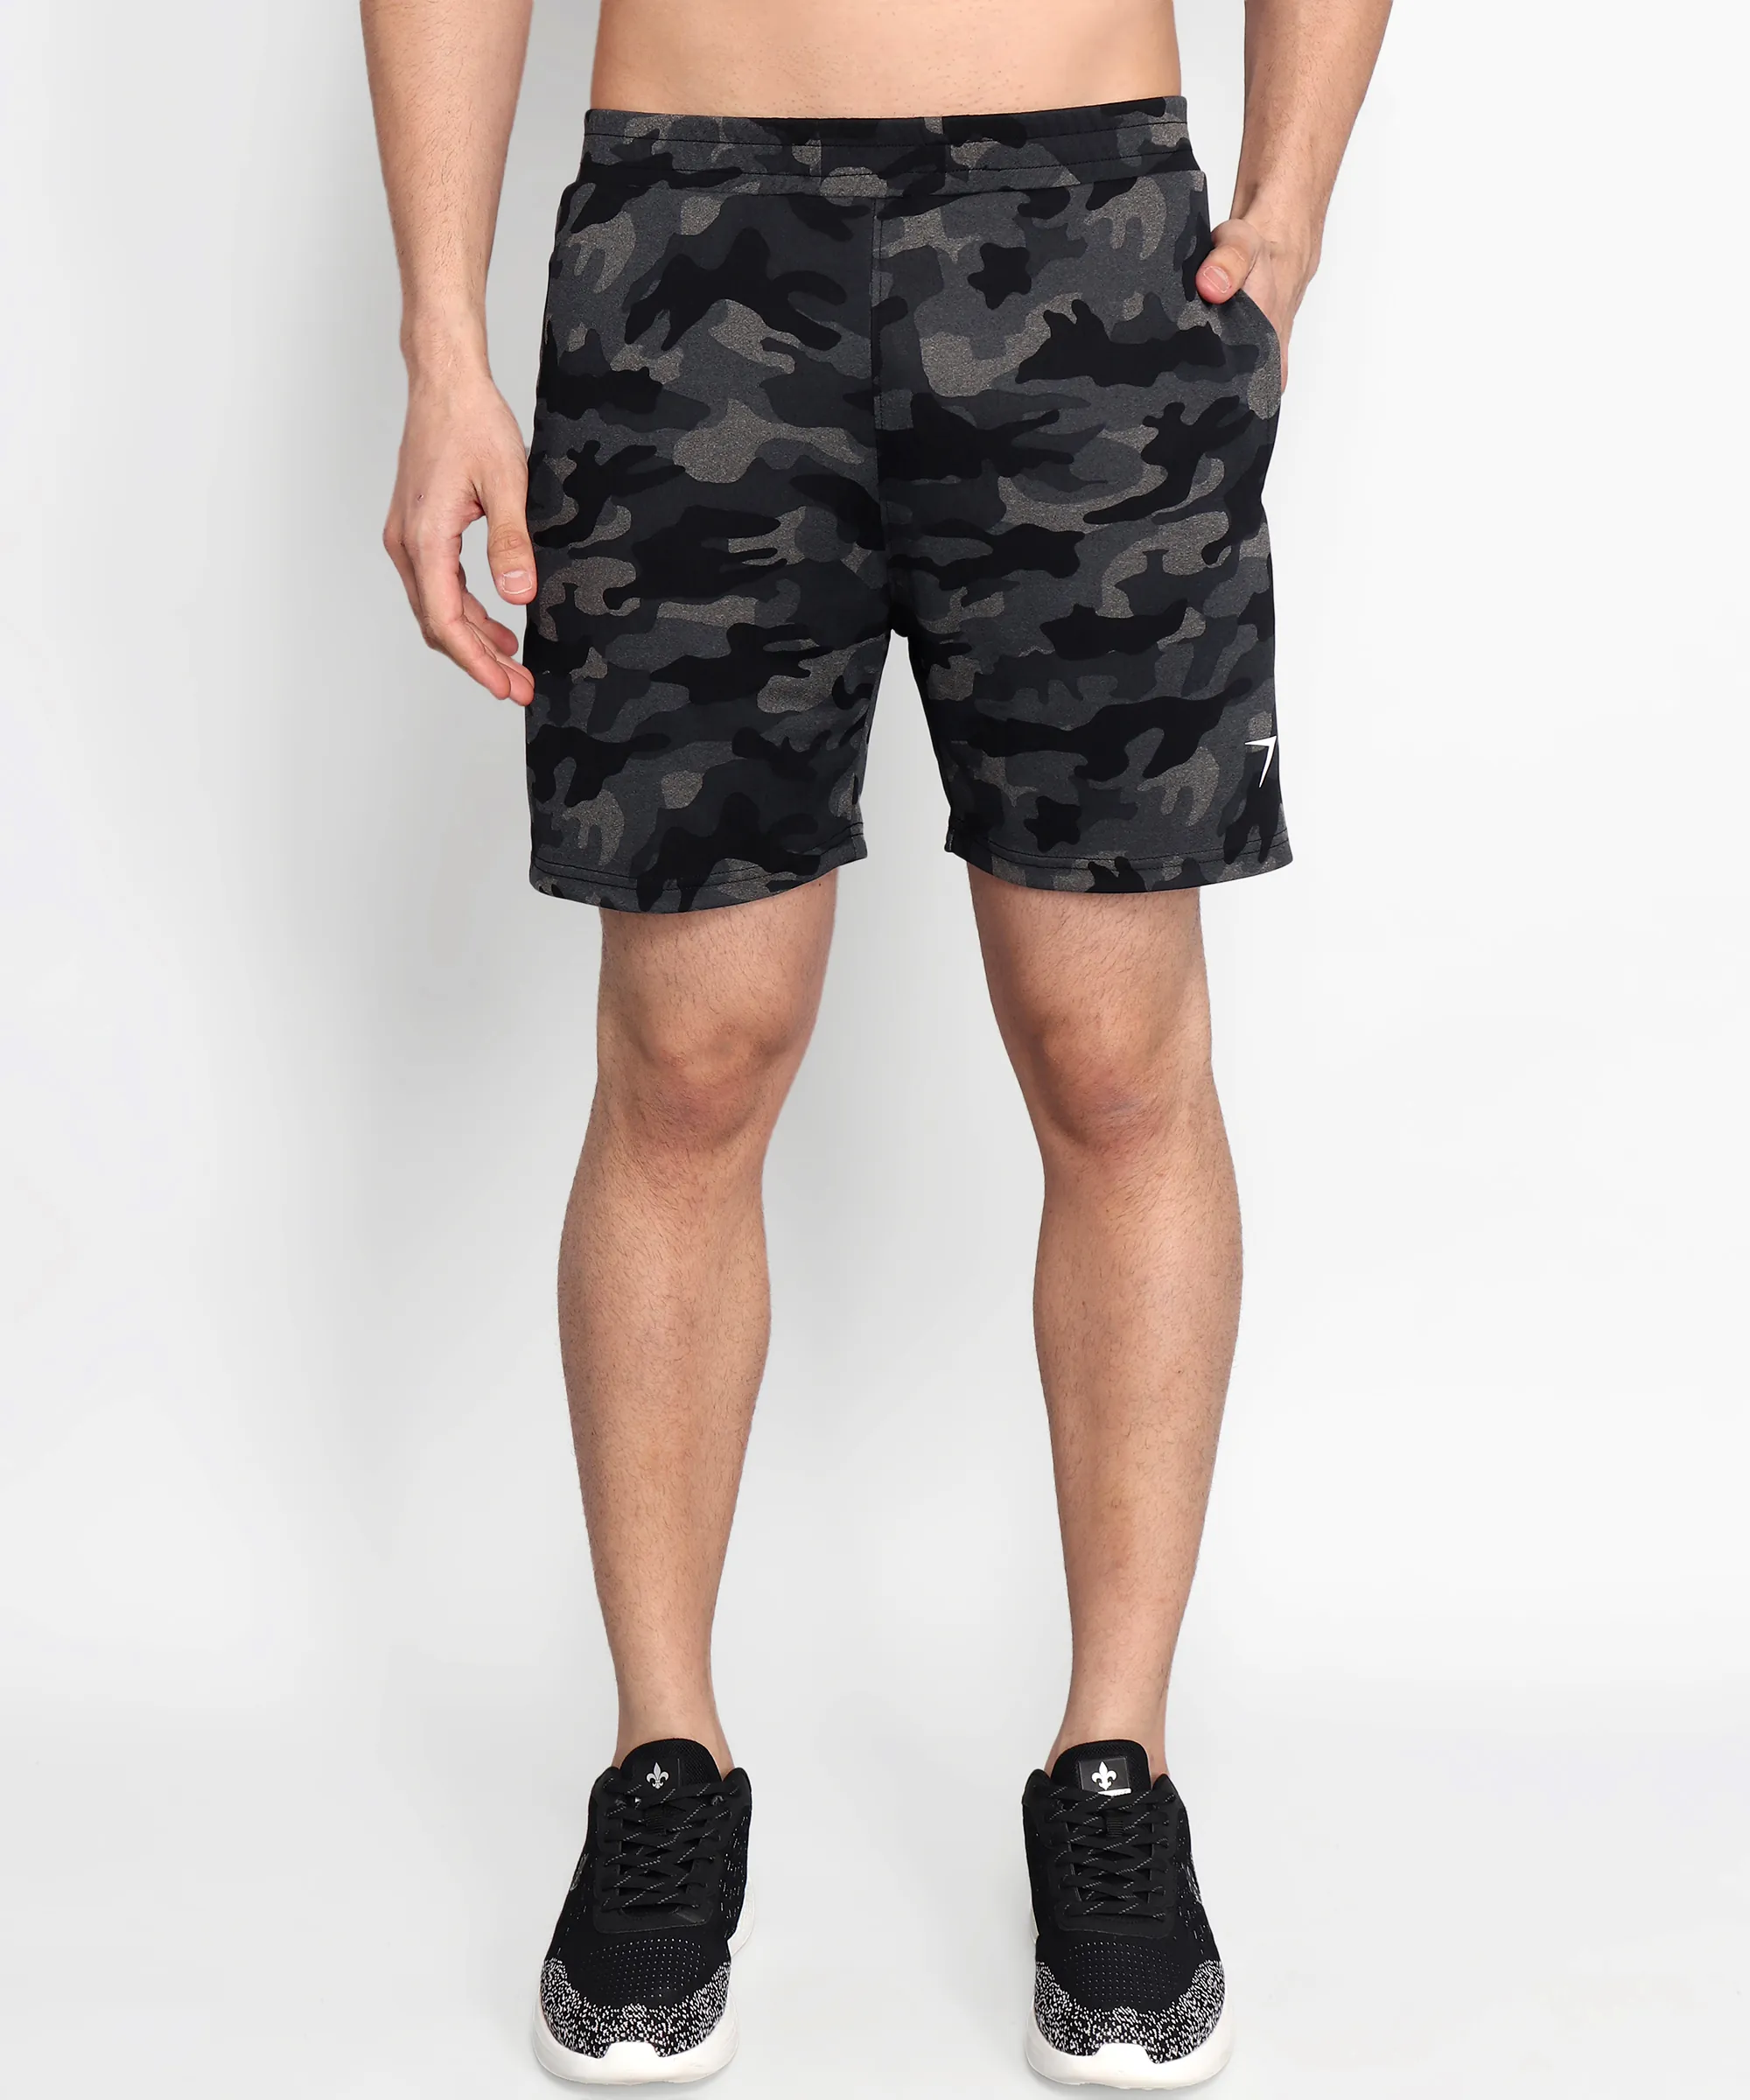 Black/Grey Camo Shorts jogger sports